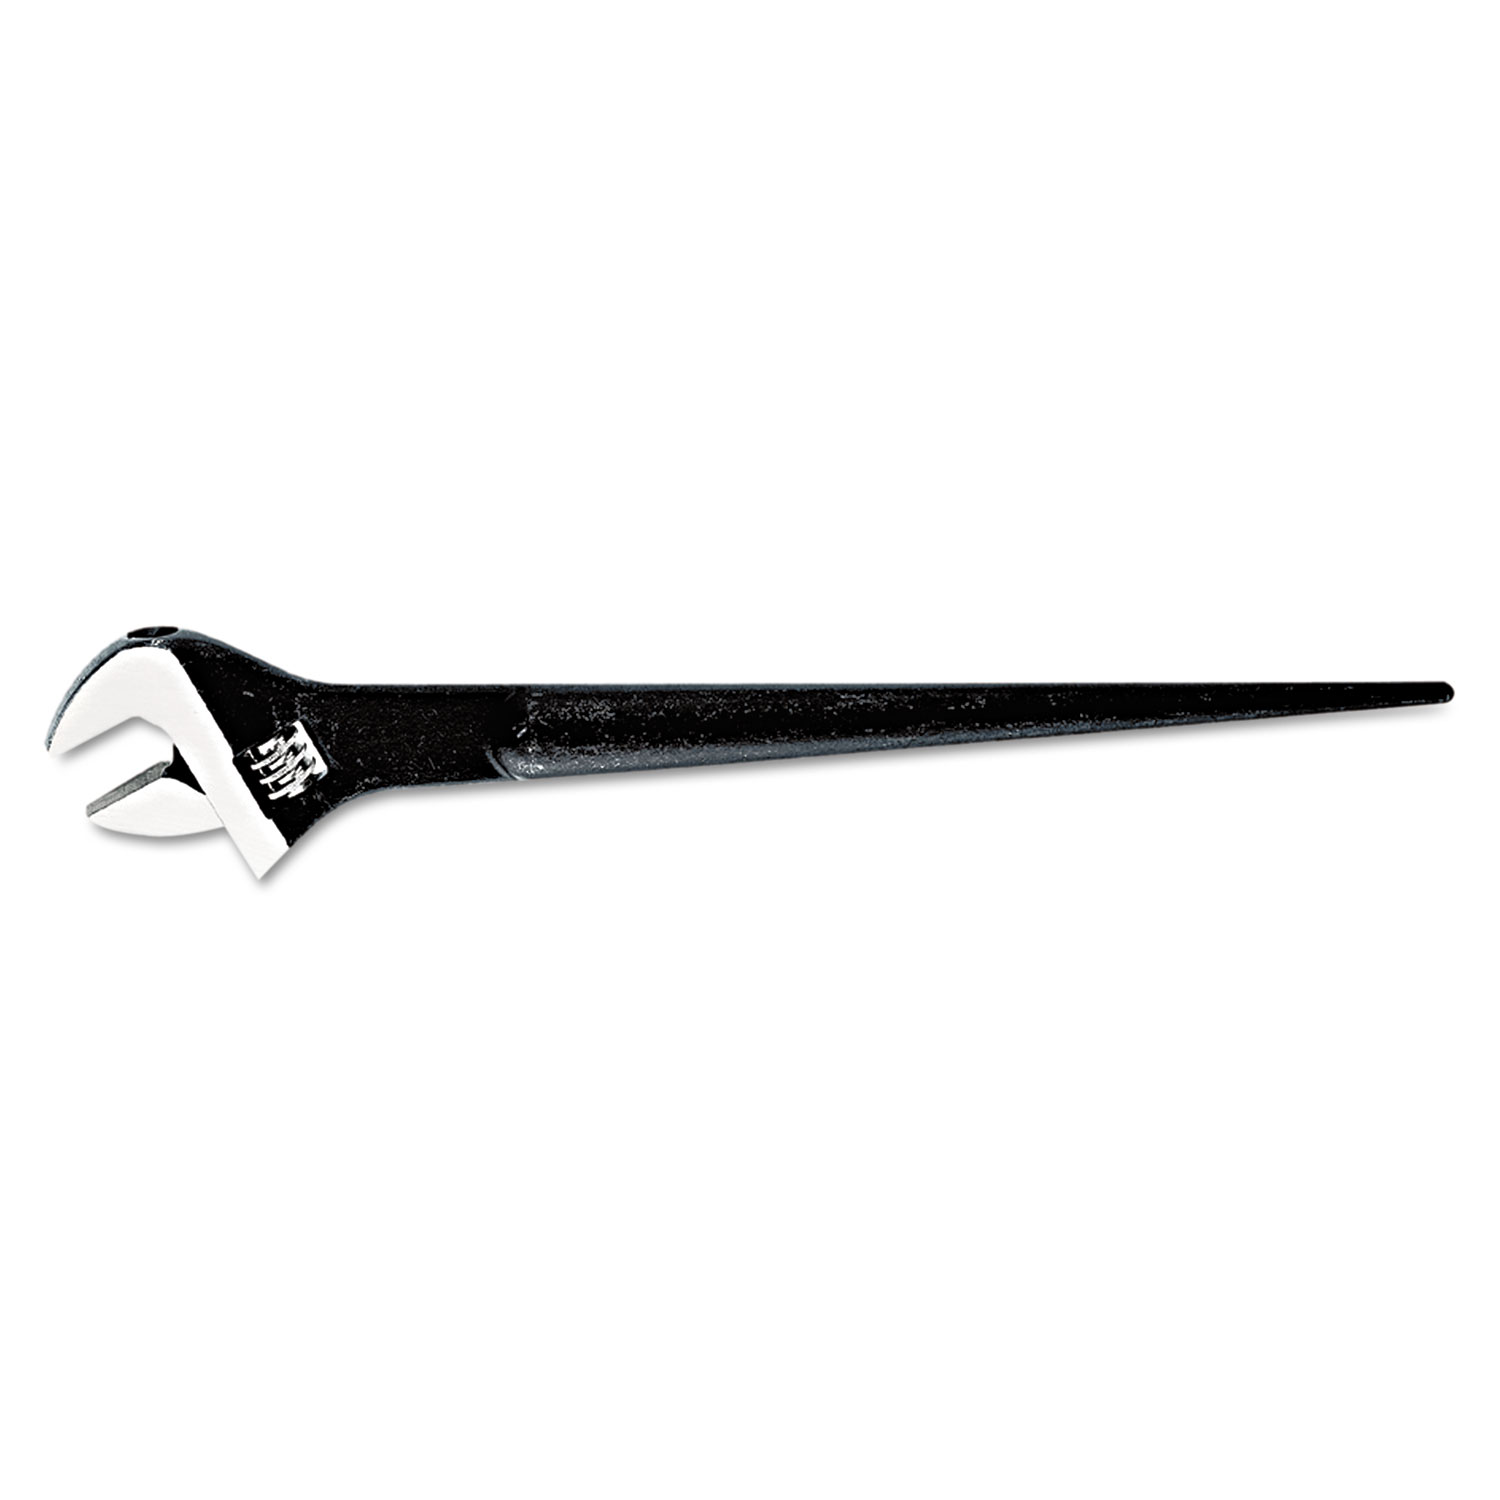 Klein Tools® Klein Tools Adjustable Spud Wrench, 16 Length, 1 1/2 Opening, Black